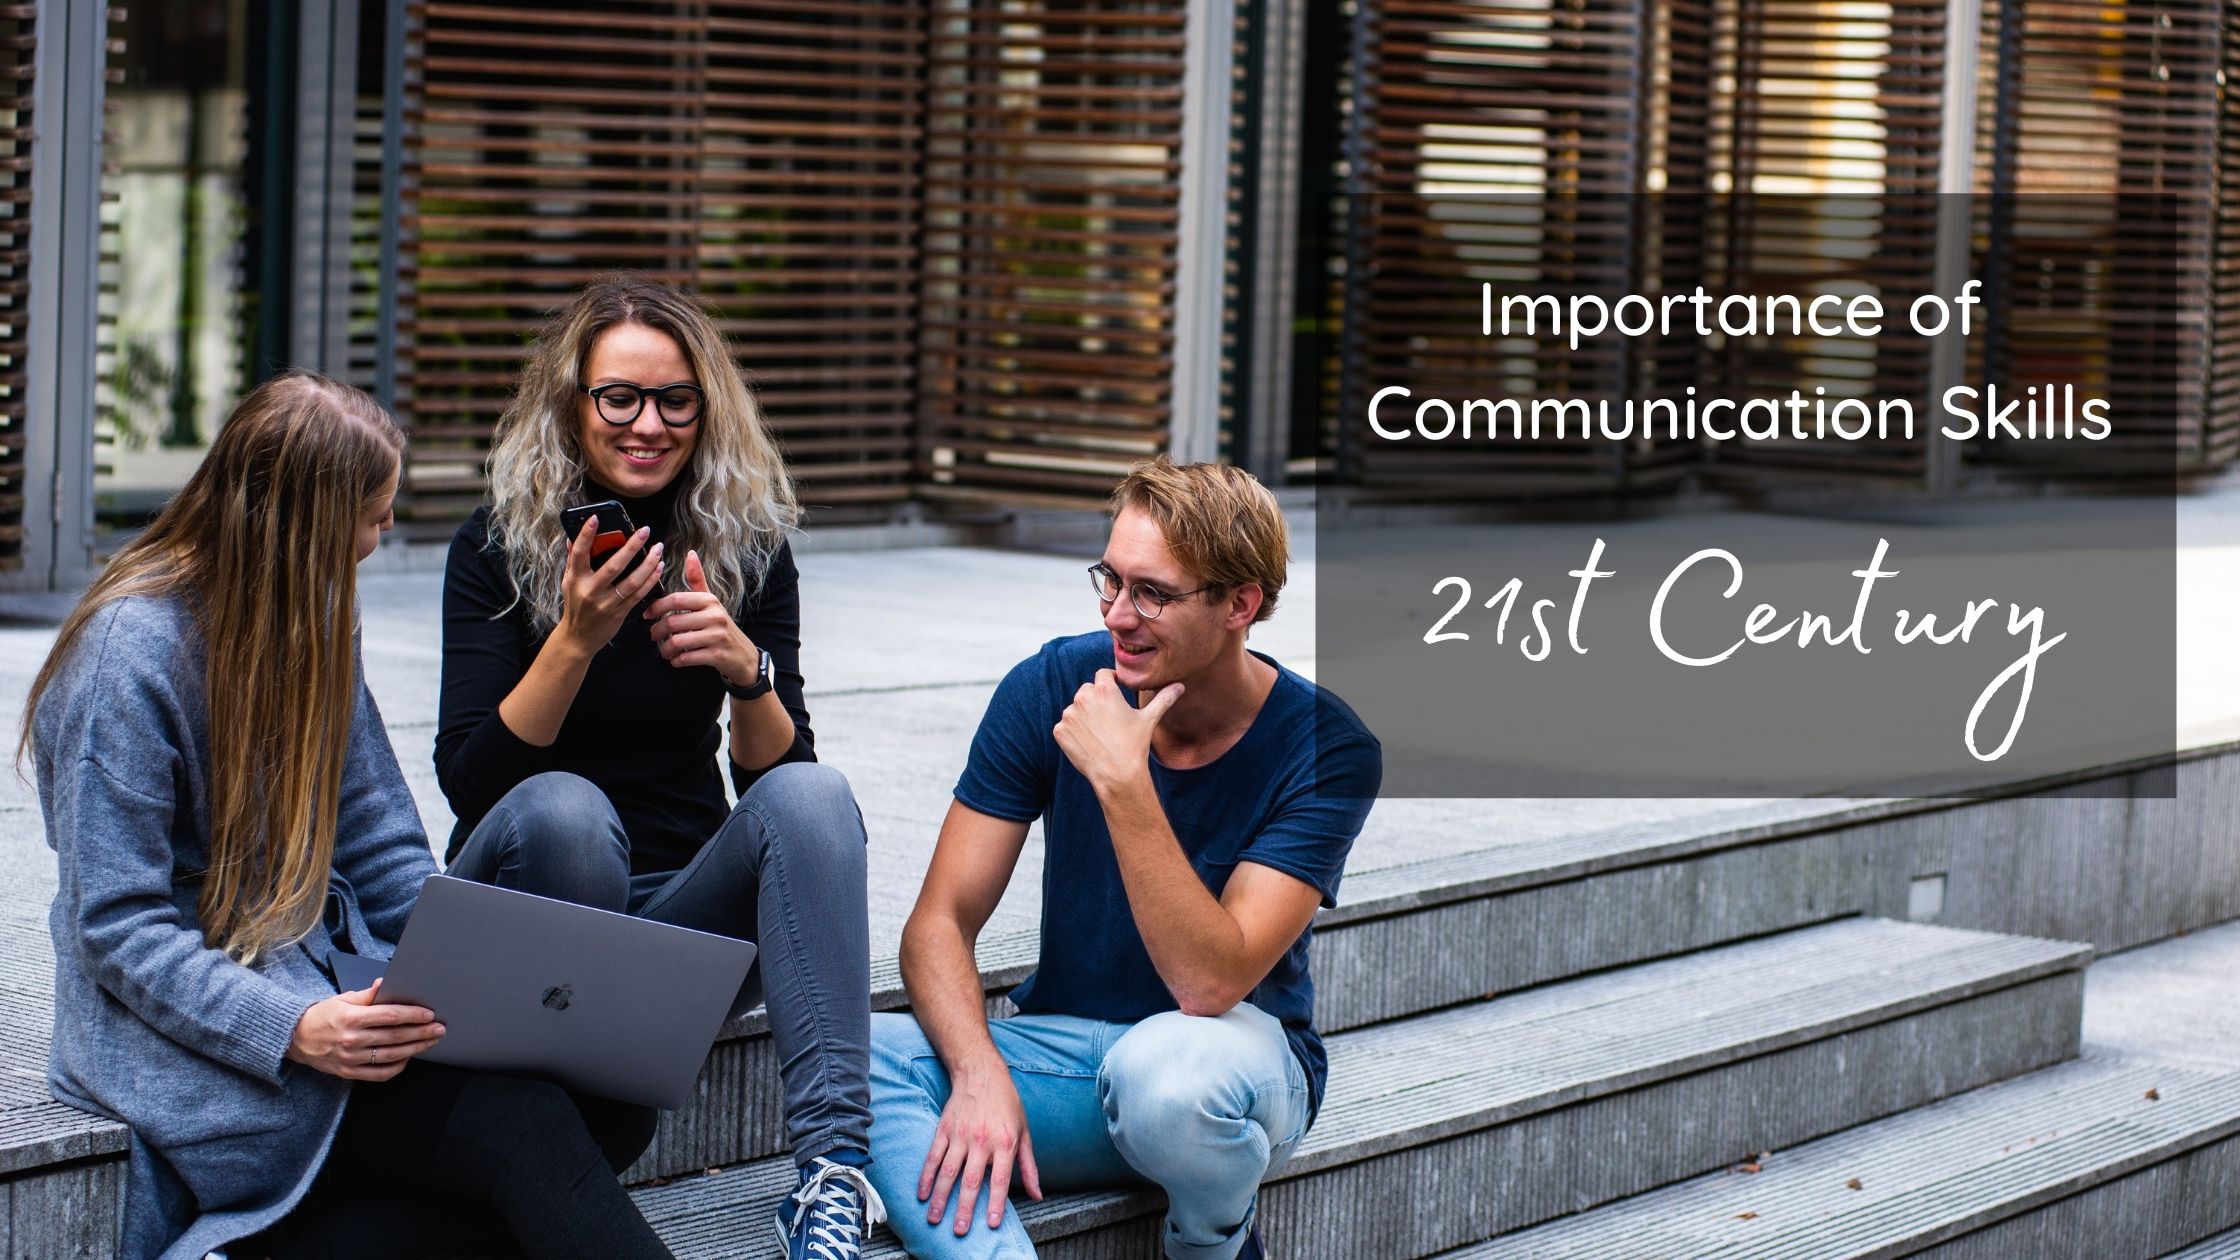 Article on Importance of Communication Skills